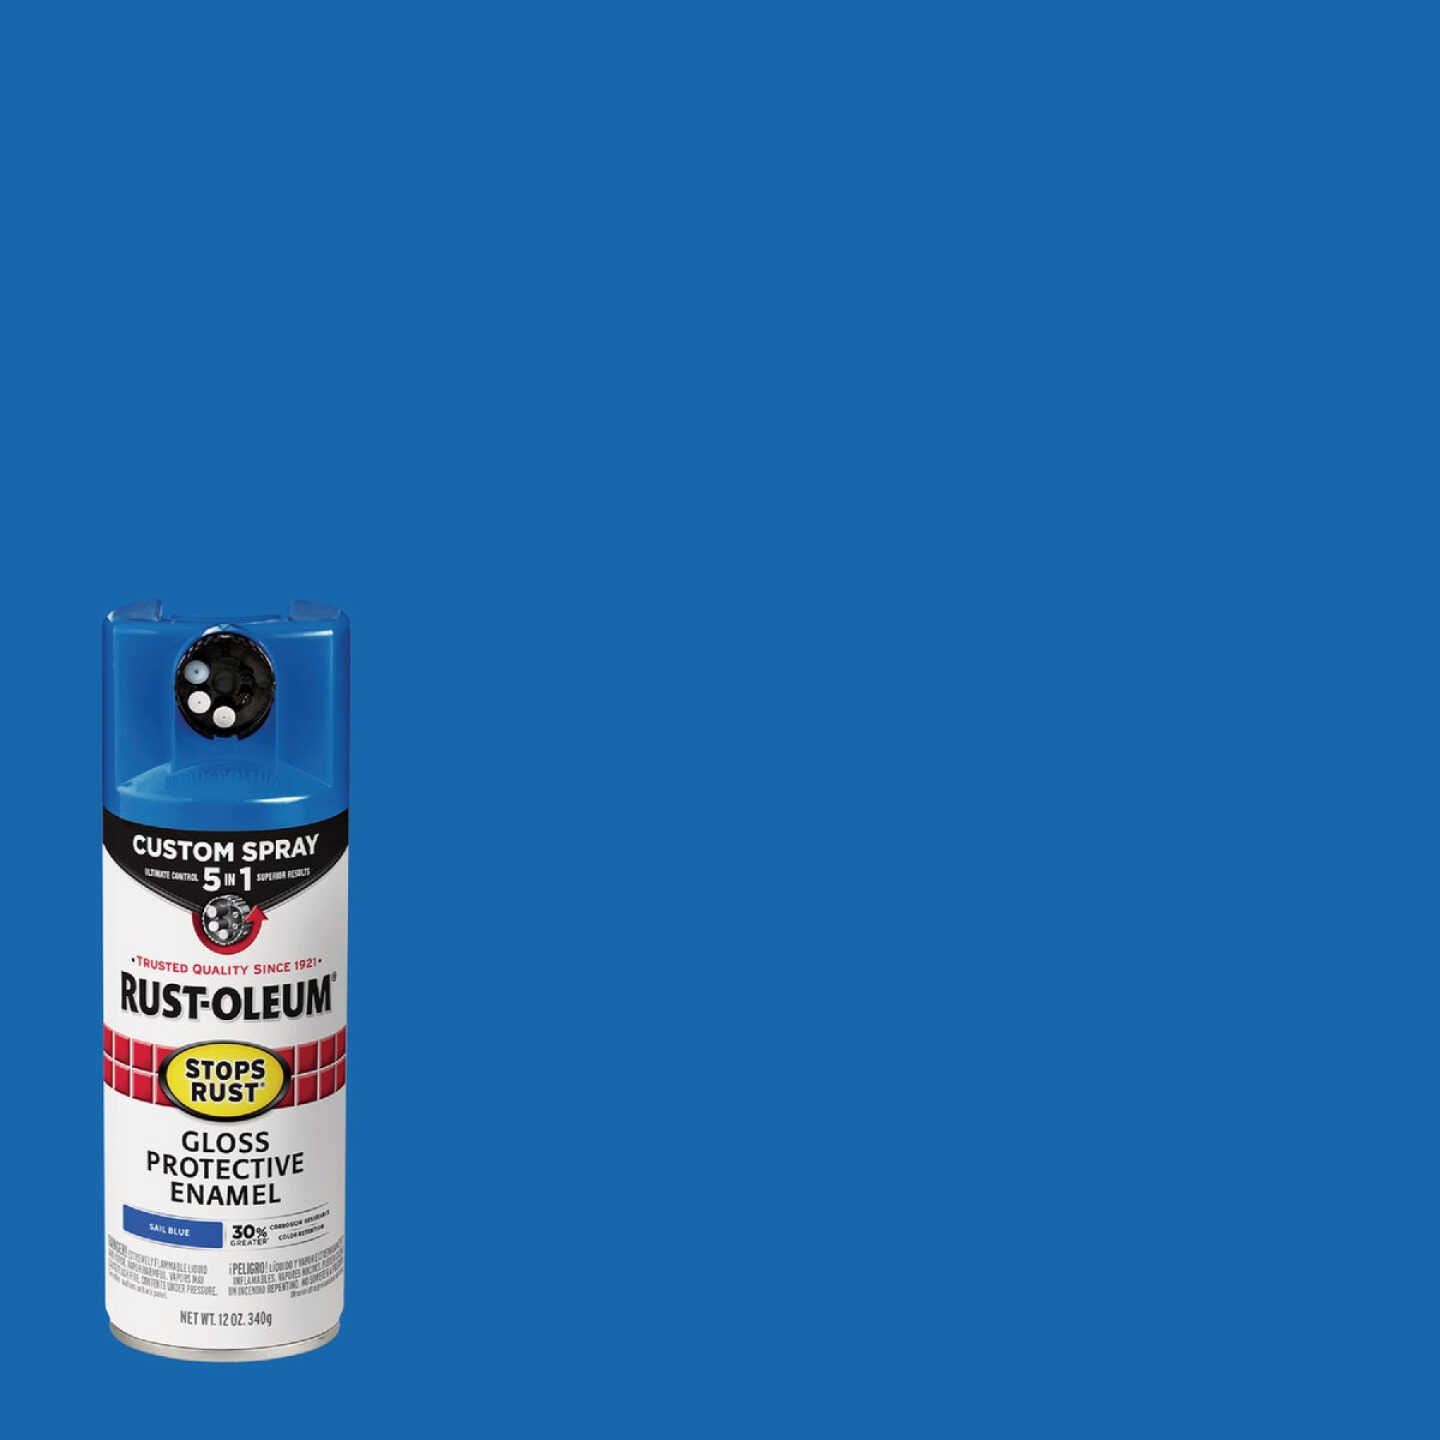 Rust-Oleum Stops Rust 12 Oz. Custom Spray 5 in 1 Gloss Spray Paint